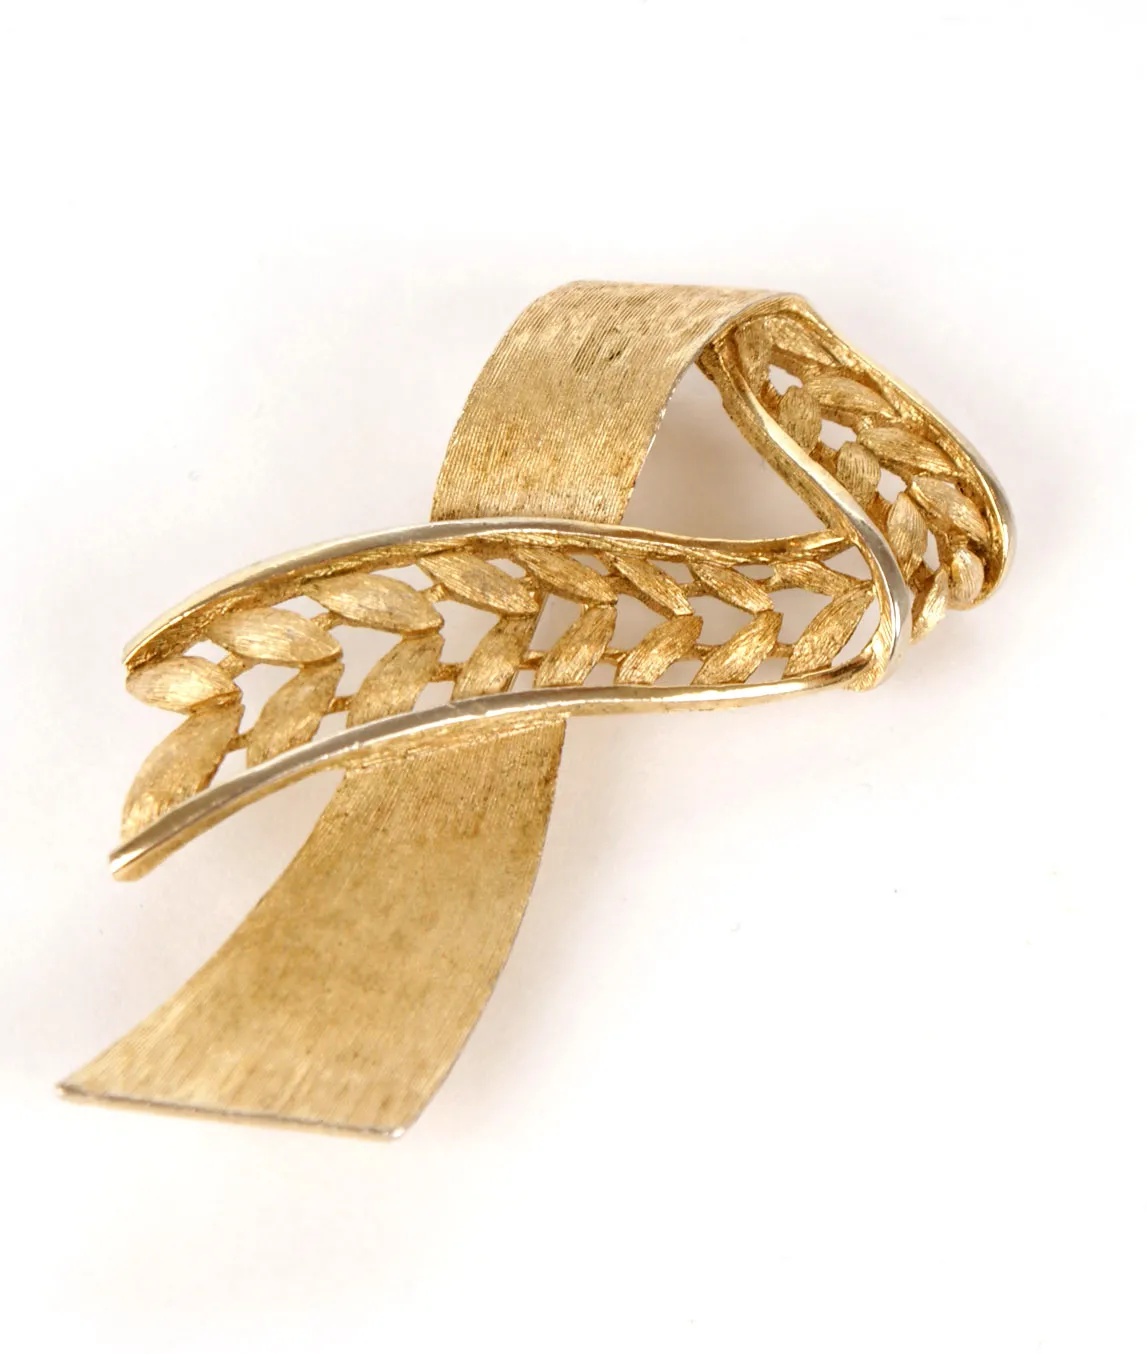 Crown Trifari ribbon shaped brooch in gold